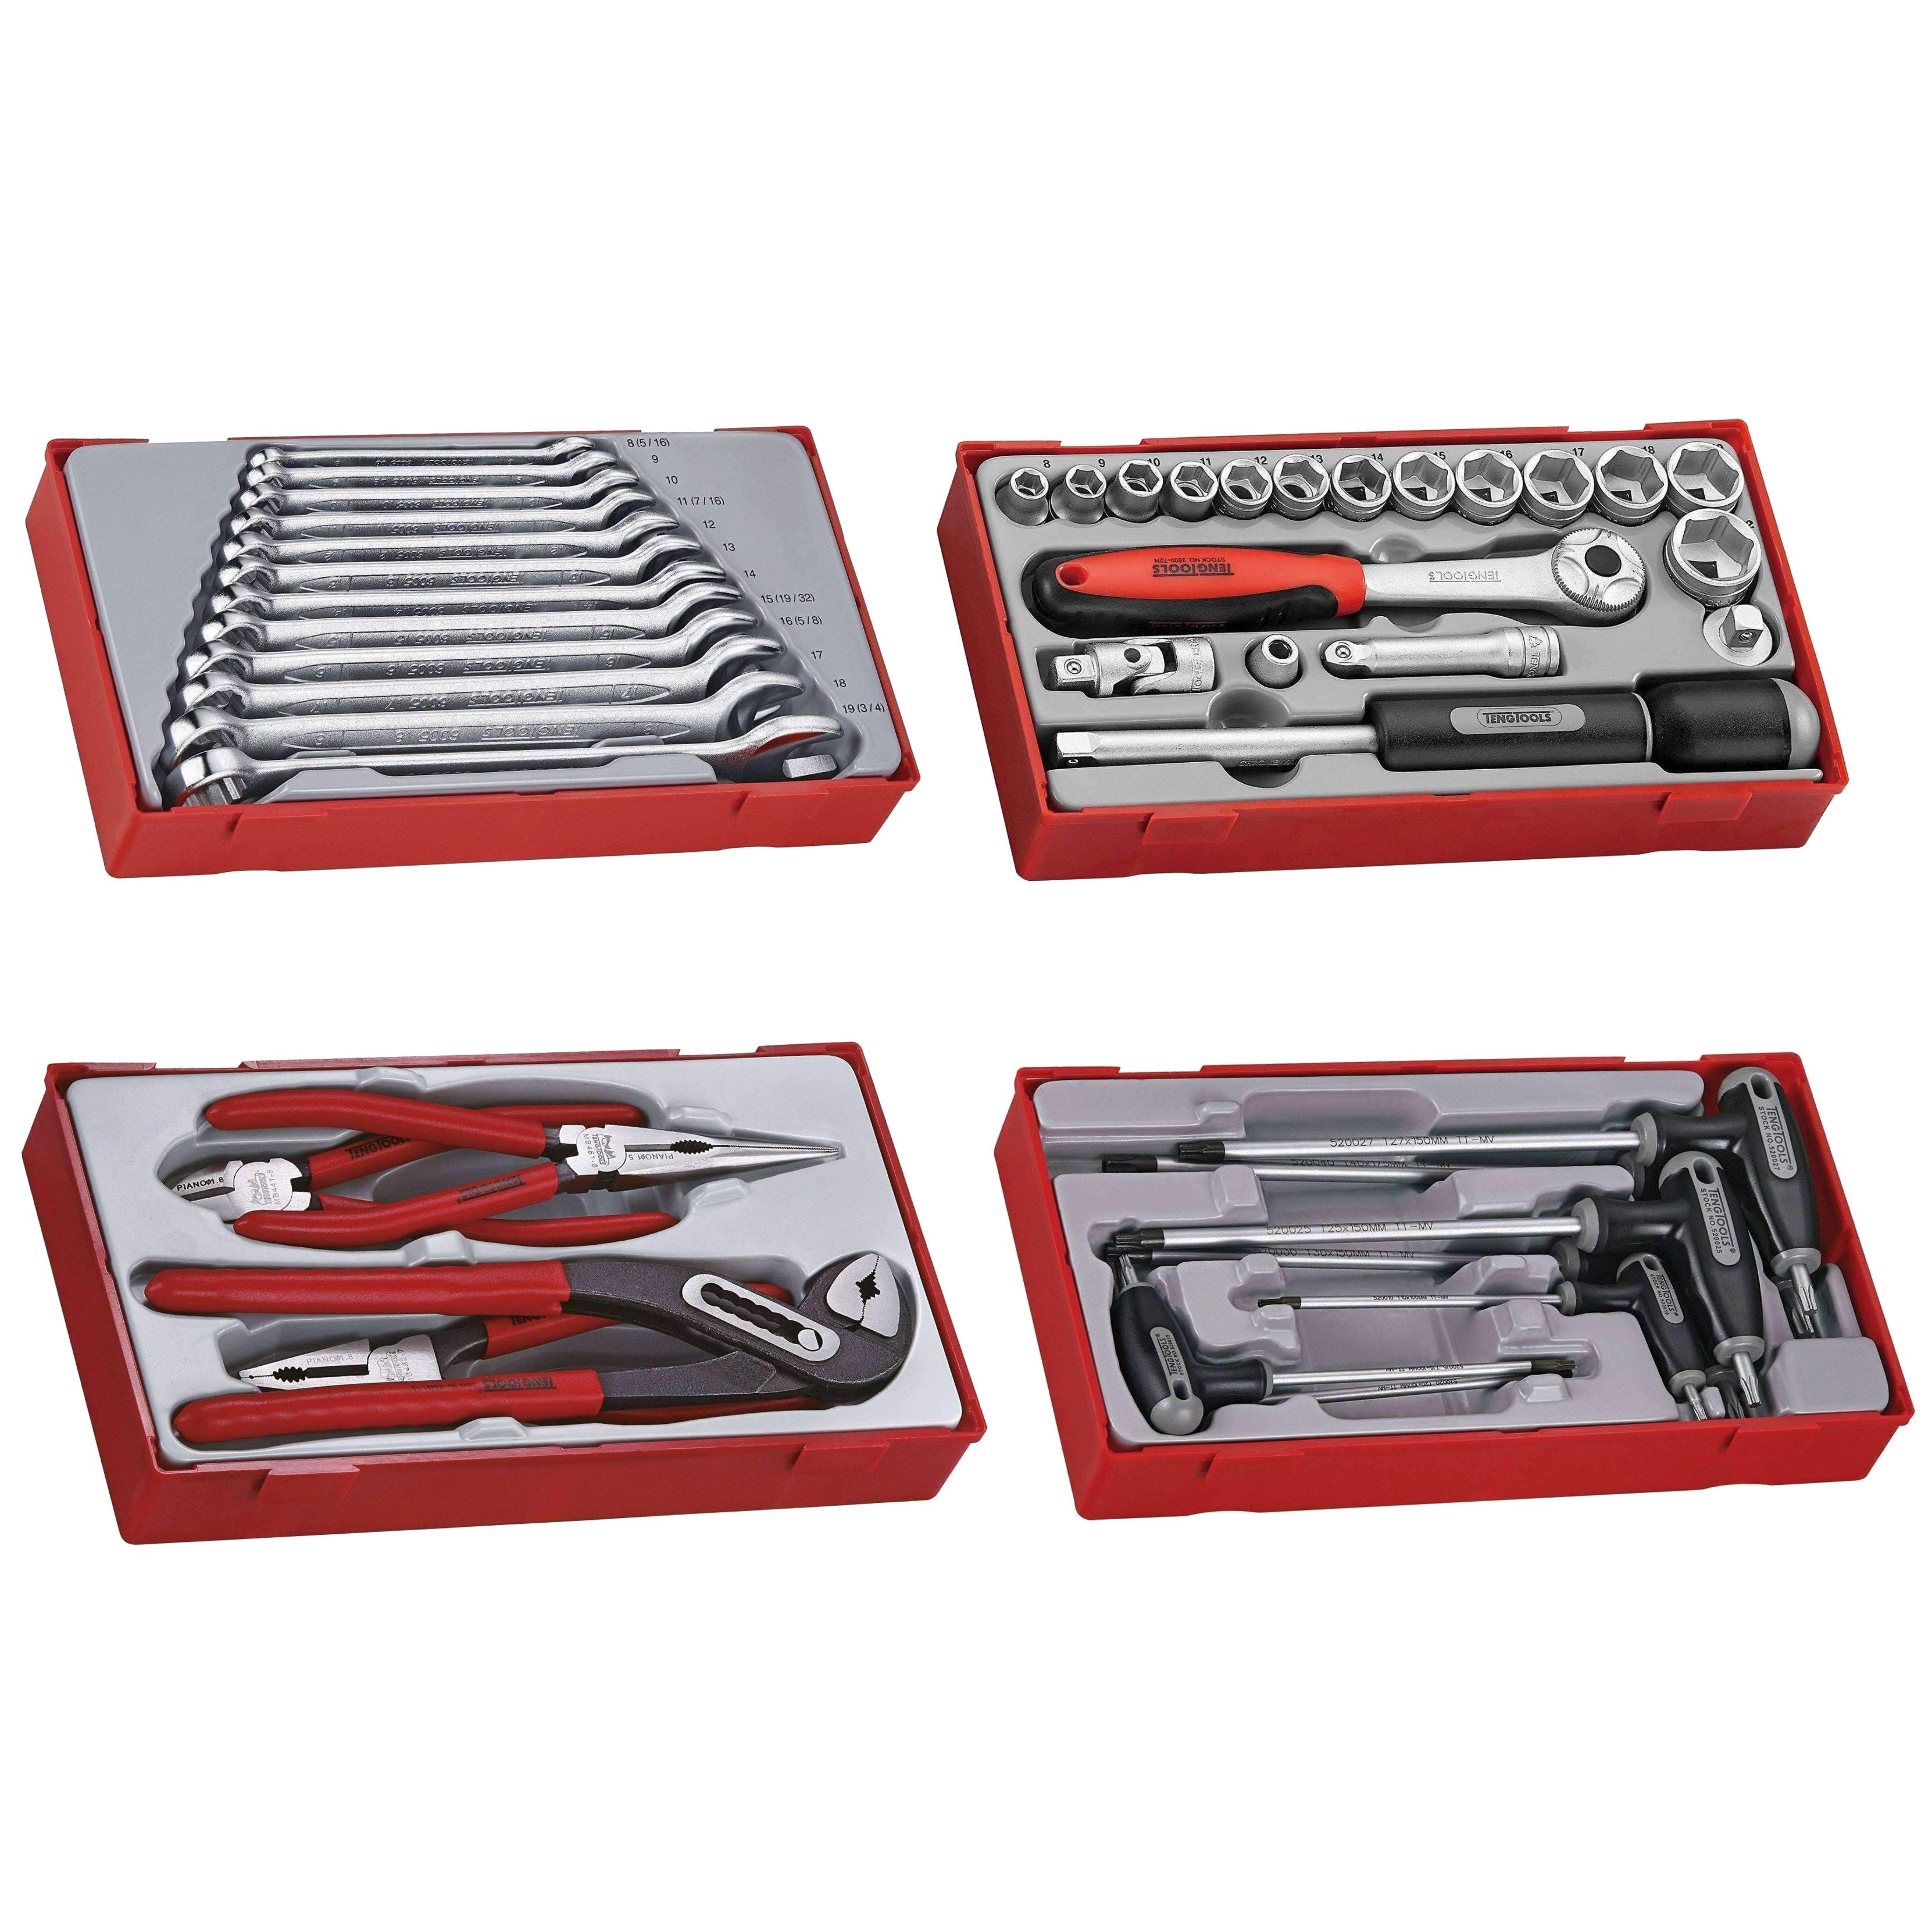 Teng Tools 288 Piece Complete Mixed General Hand Tool Kit (Mega Bundle 3) - TCW707EV-KIT4